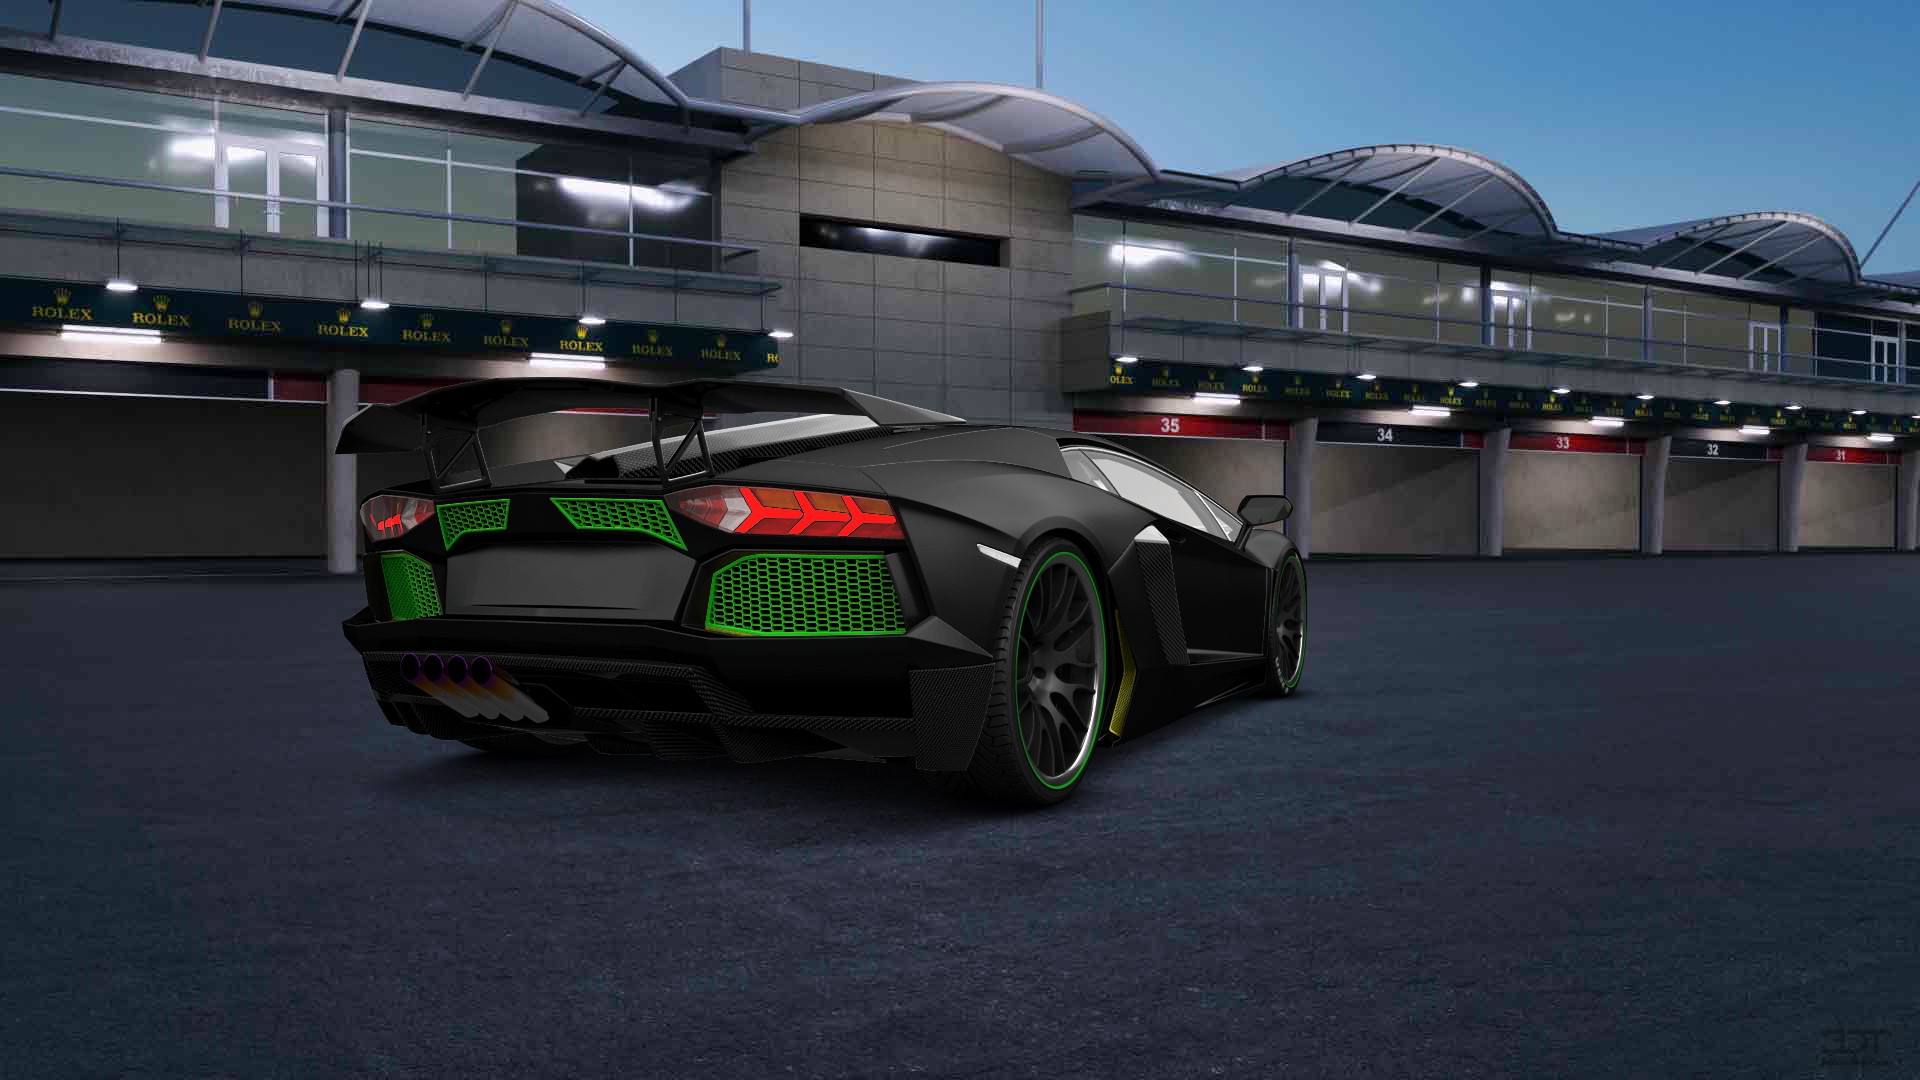 Lamborghini Aventador challenge 2 Door Coupe 4012 tuning